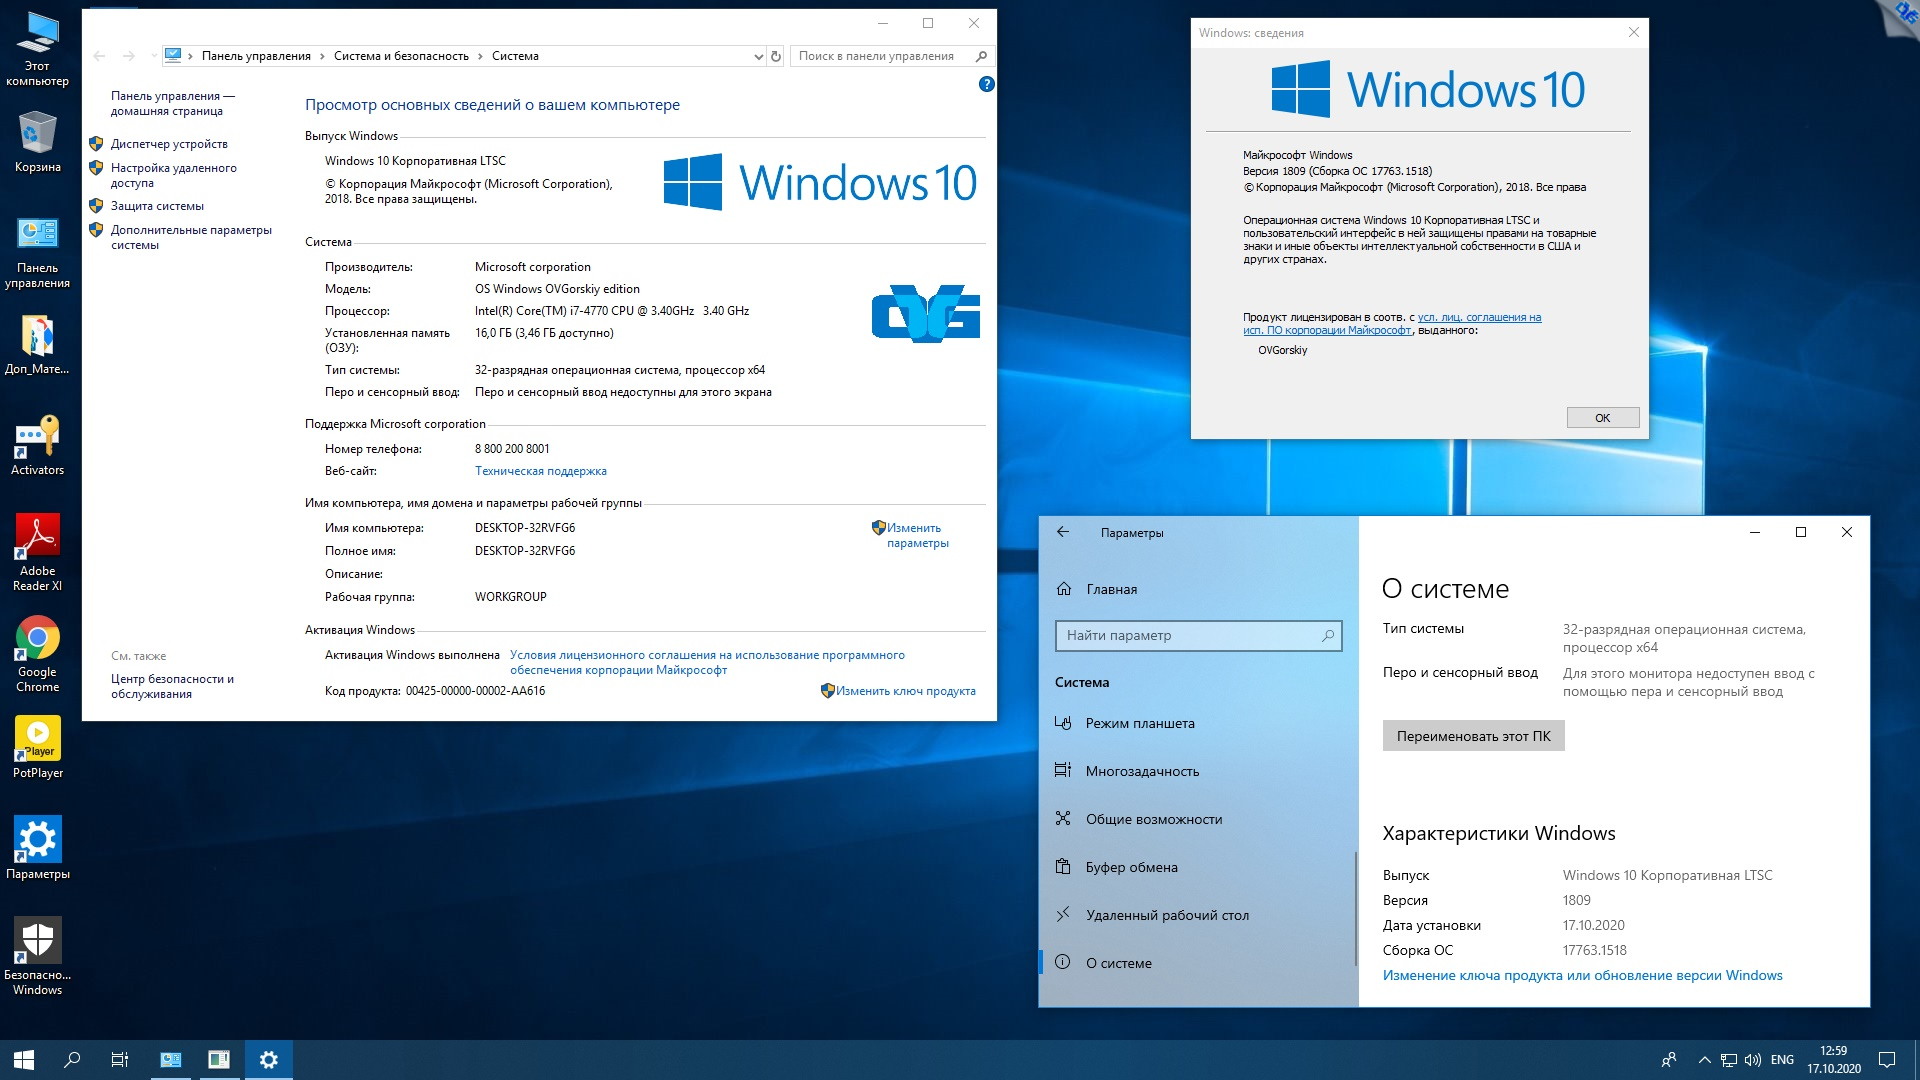 Вин 10 64 бит. Windows 10 Enterprise корпоративная. Windows 10 корпоративная LTSC. Windows 10 Pro корпоративная. Windows 10 2020 корпоративная.